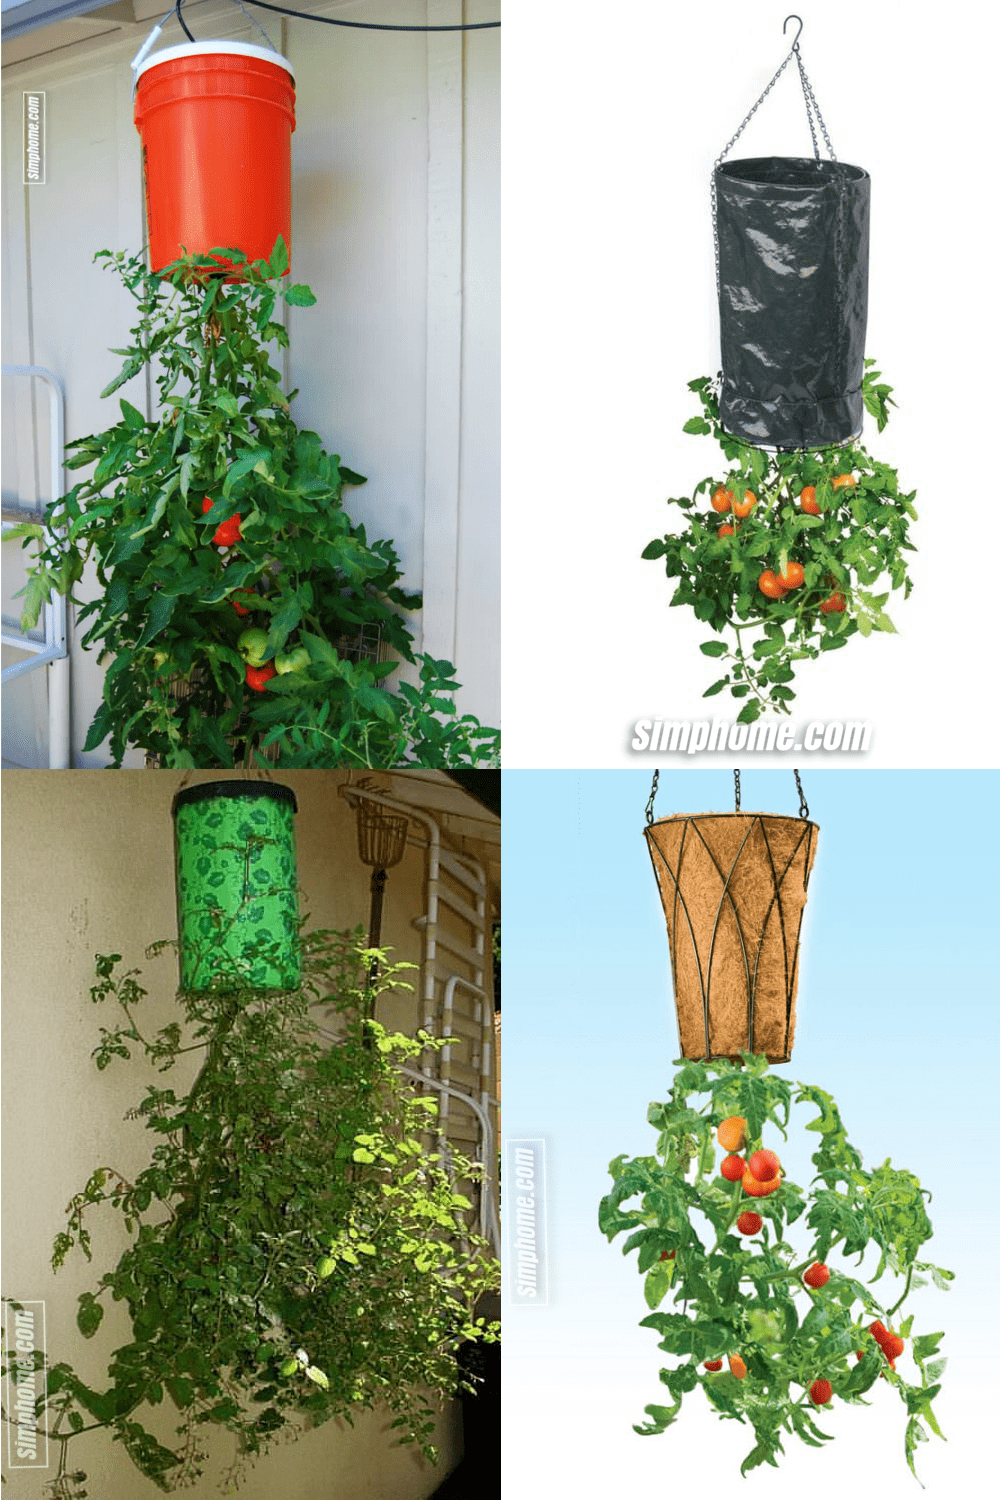 10.Simphome.com An Upside Down Tomato Planters project idea